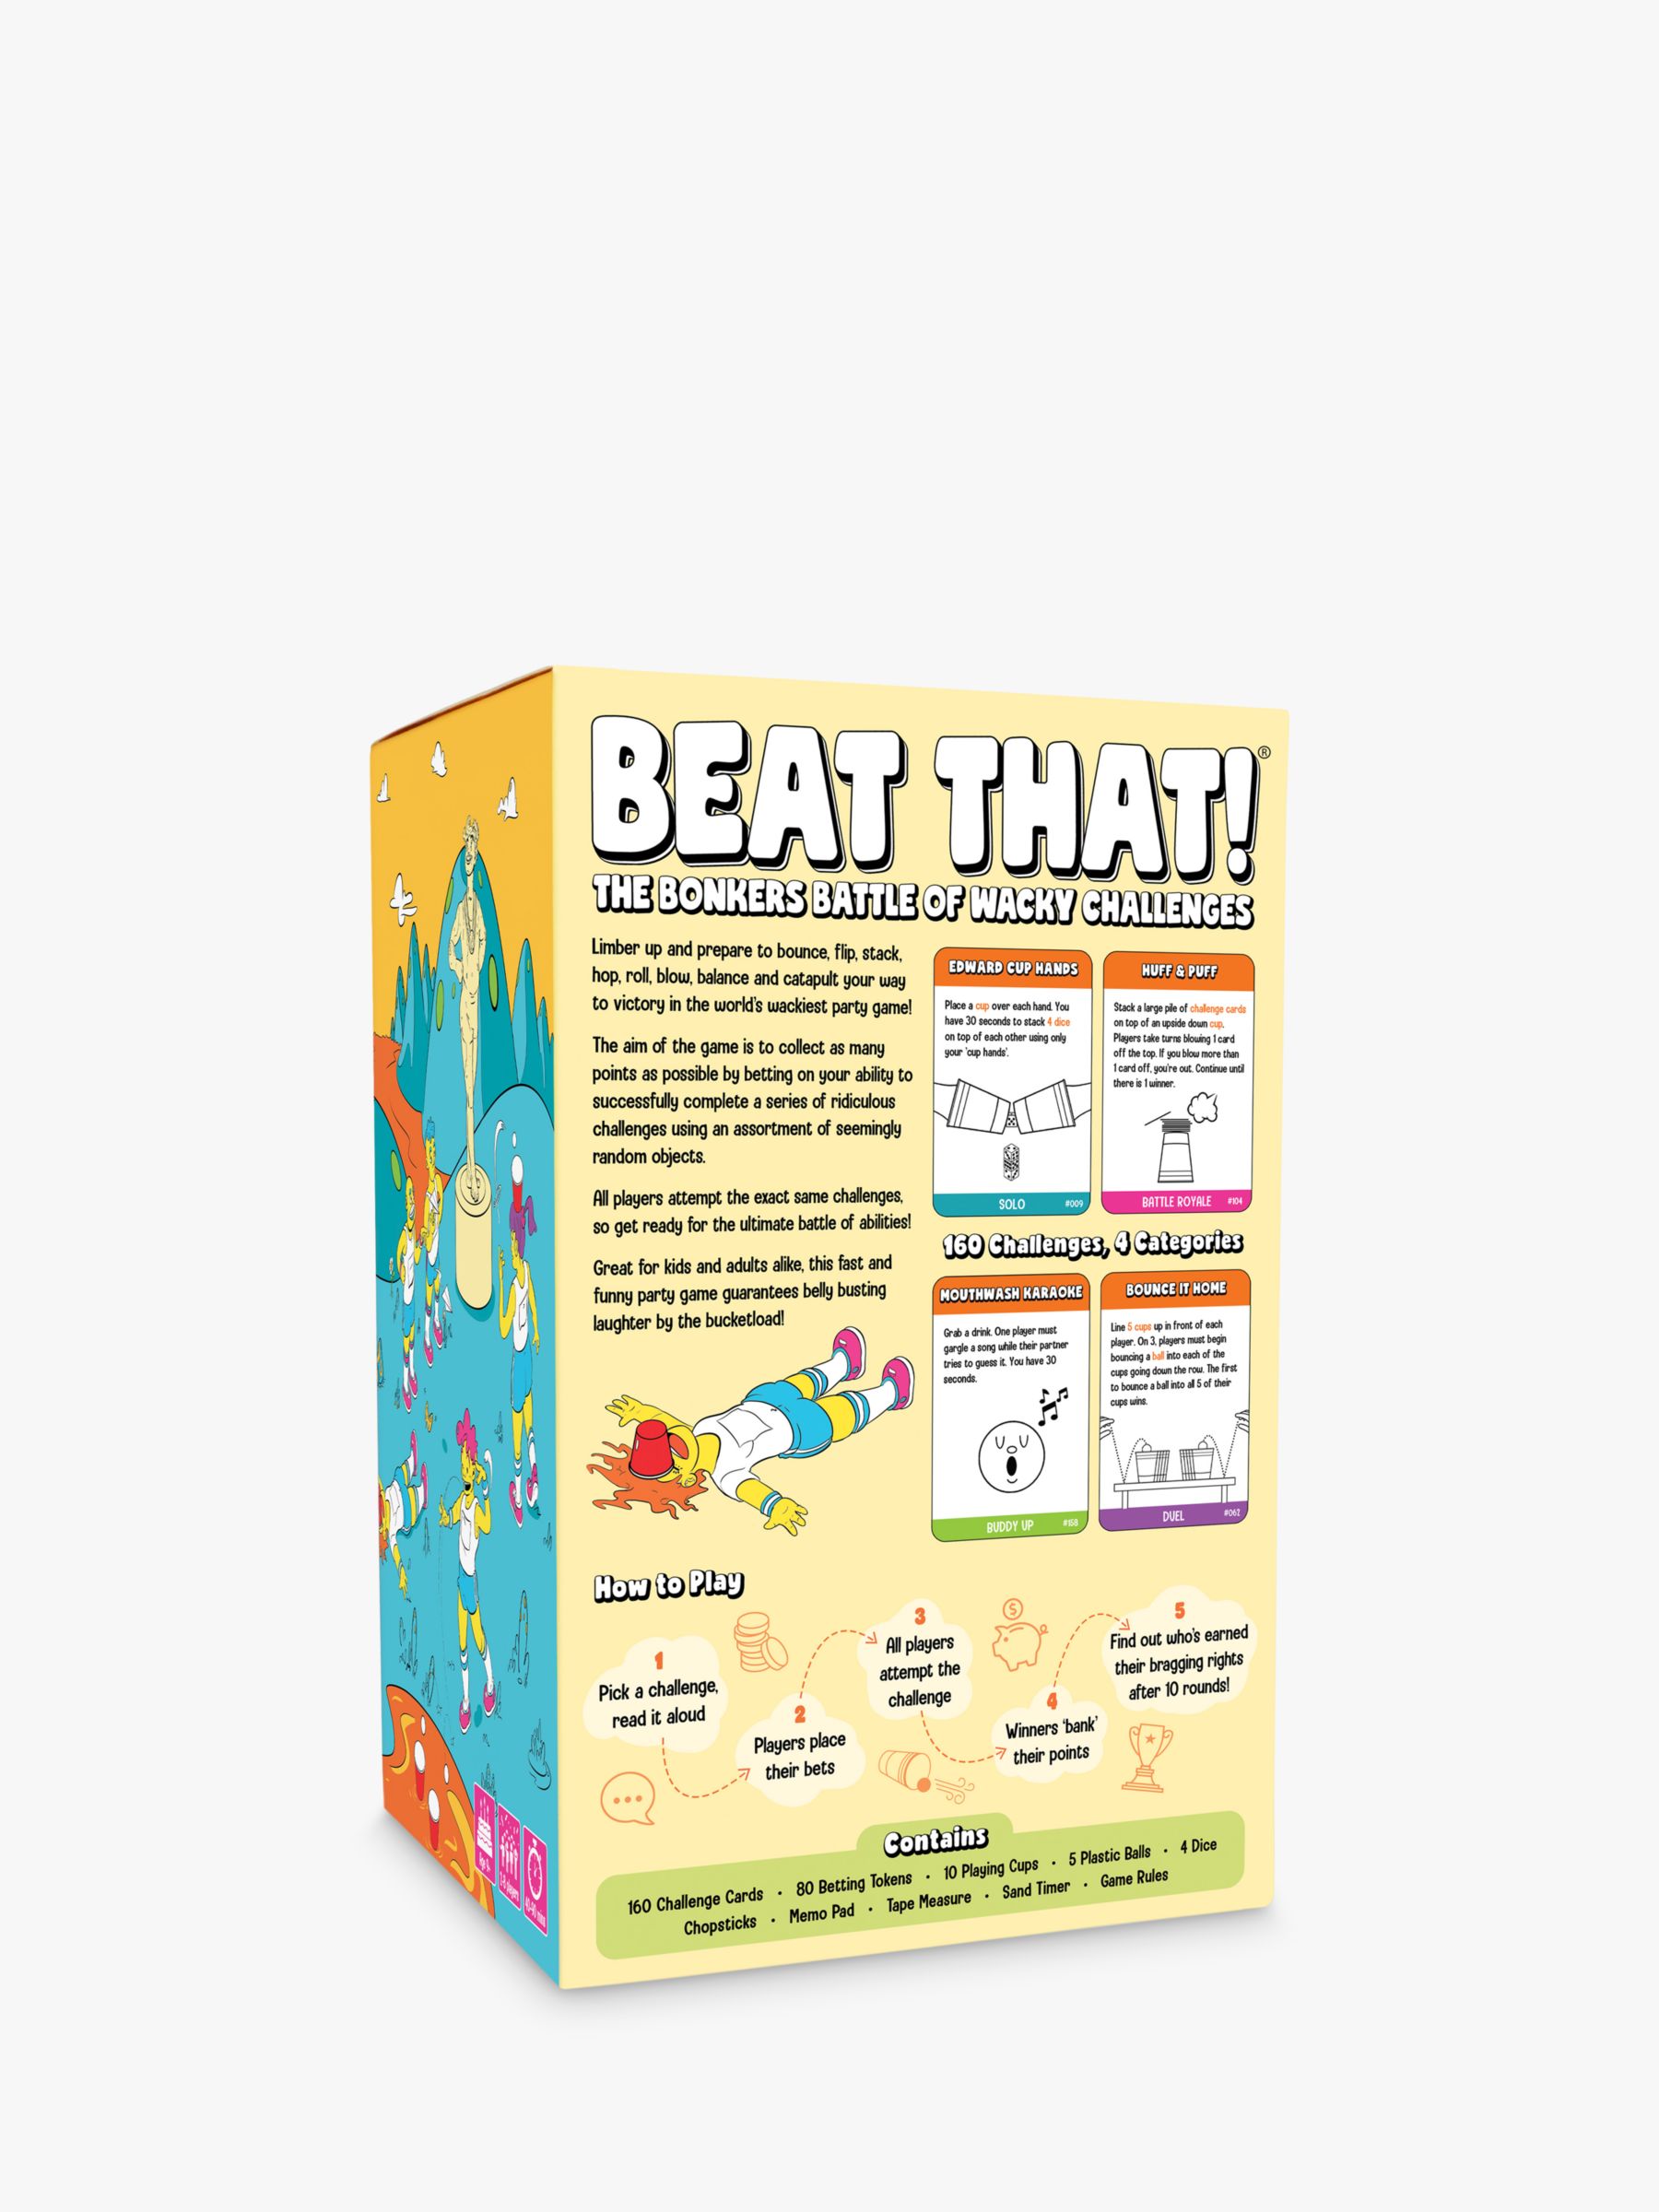 Beat That! The Bonkers Battle of Wacky Challenges | Board Games | Zatu  Games UK